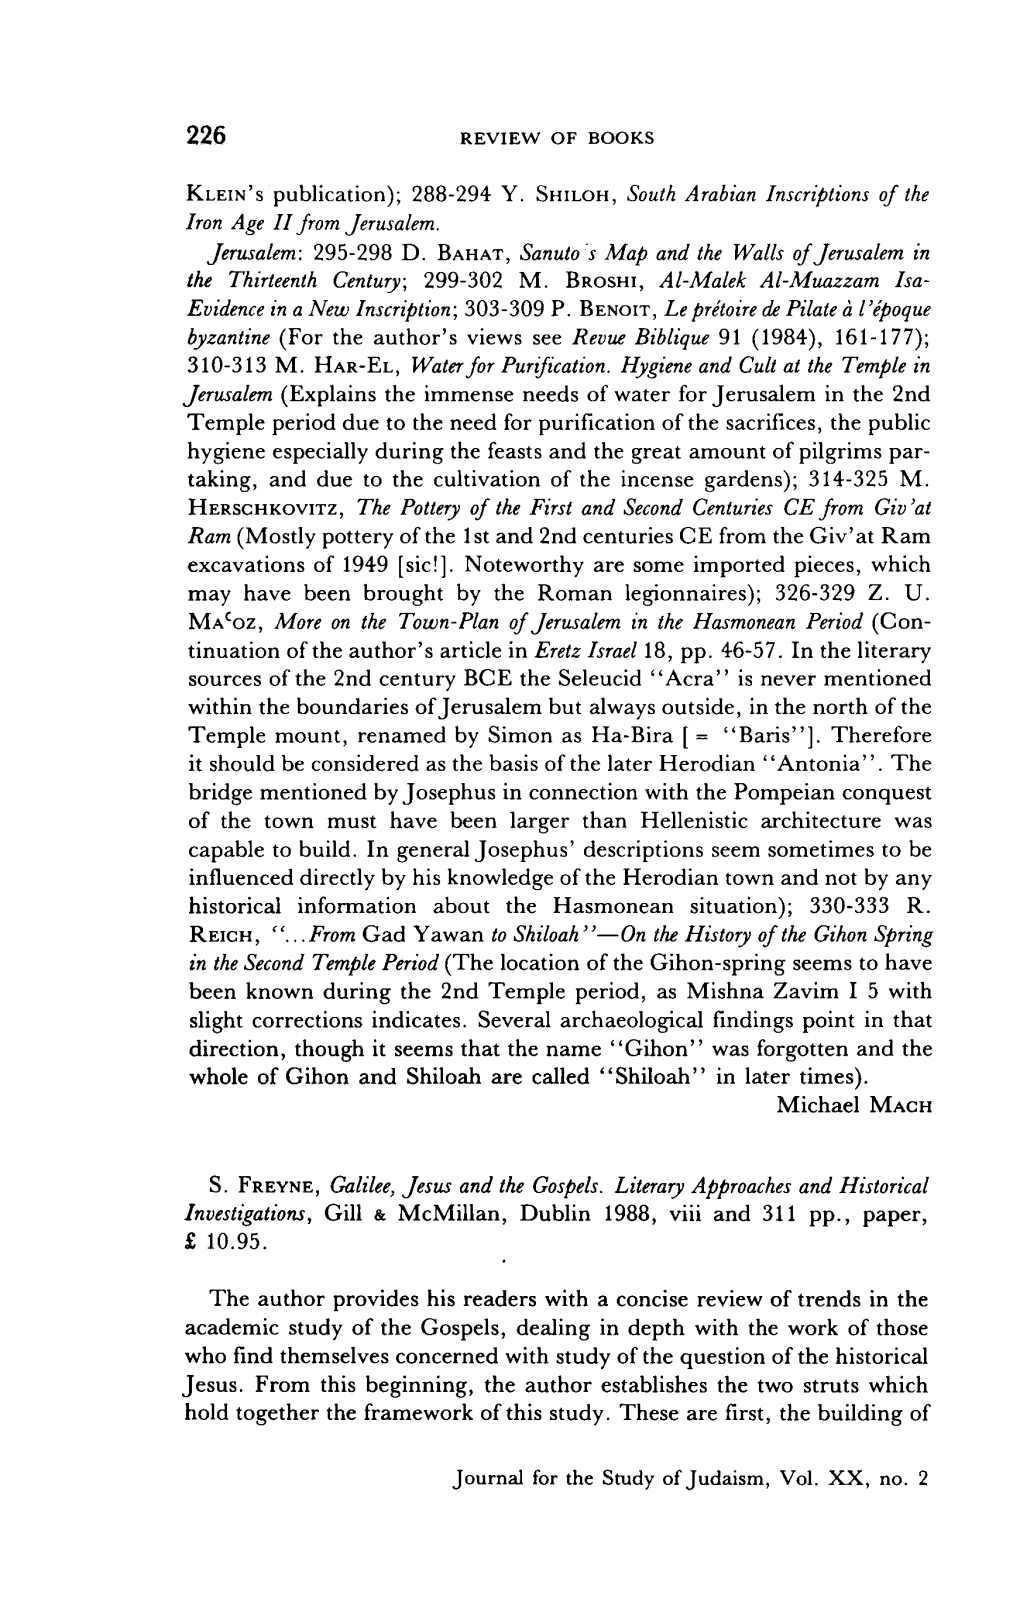 226 KLEIN's Publication); 288-294 Y. SHILOH, South Arabian